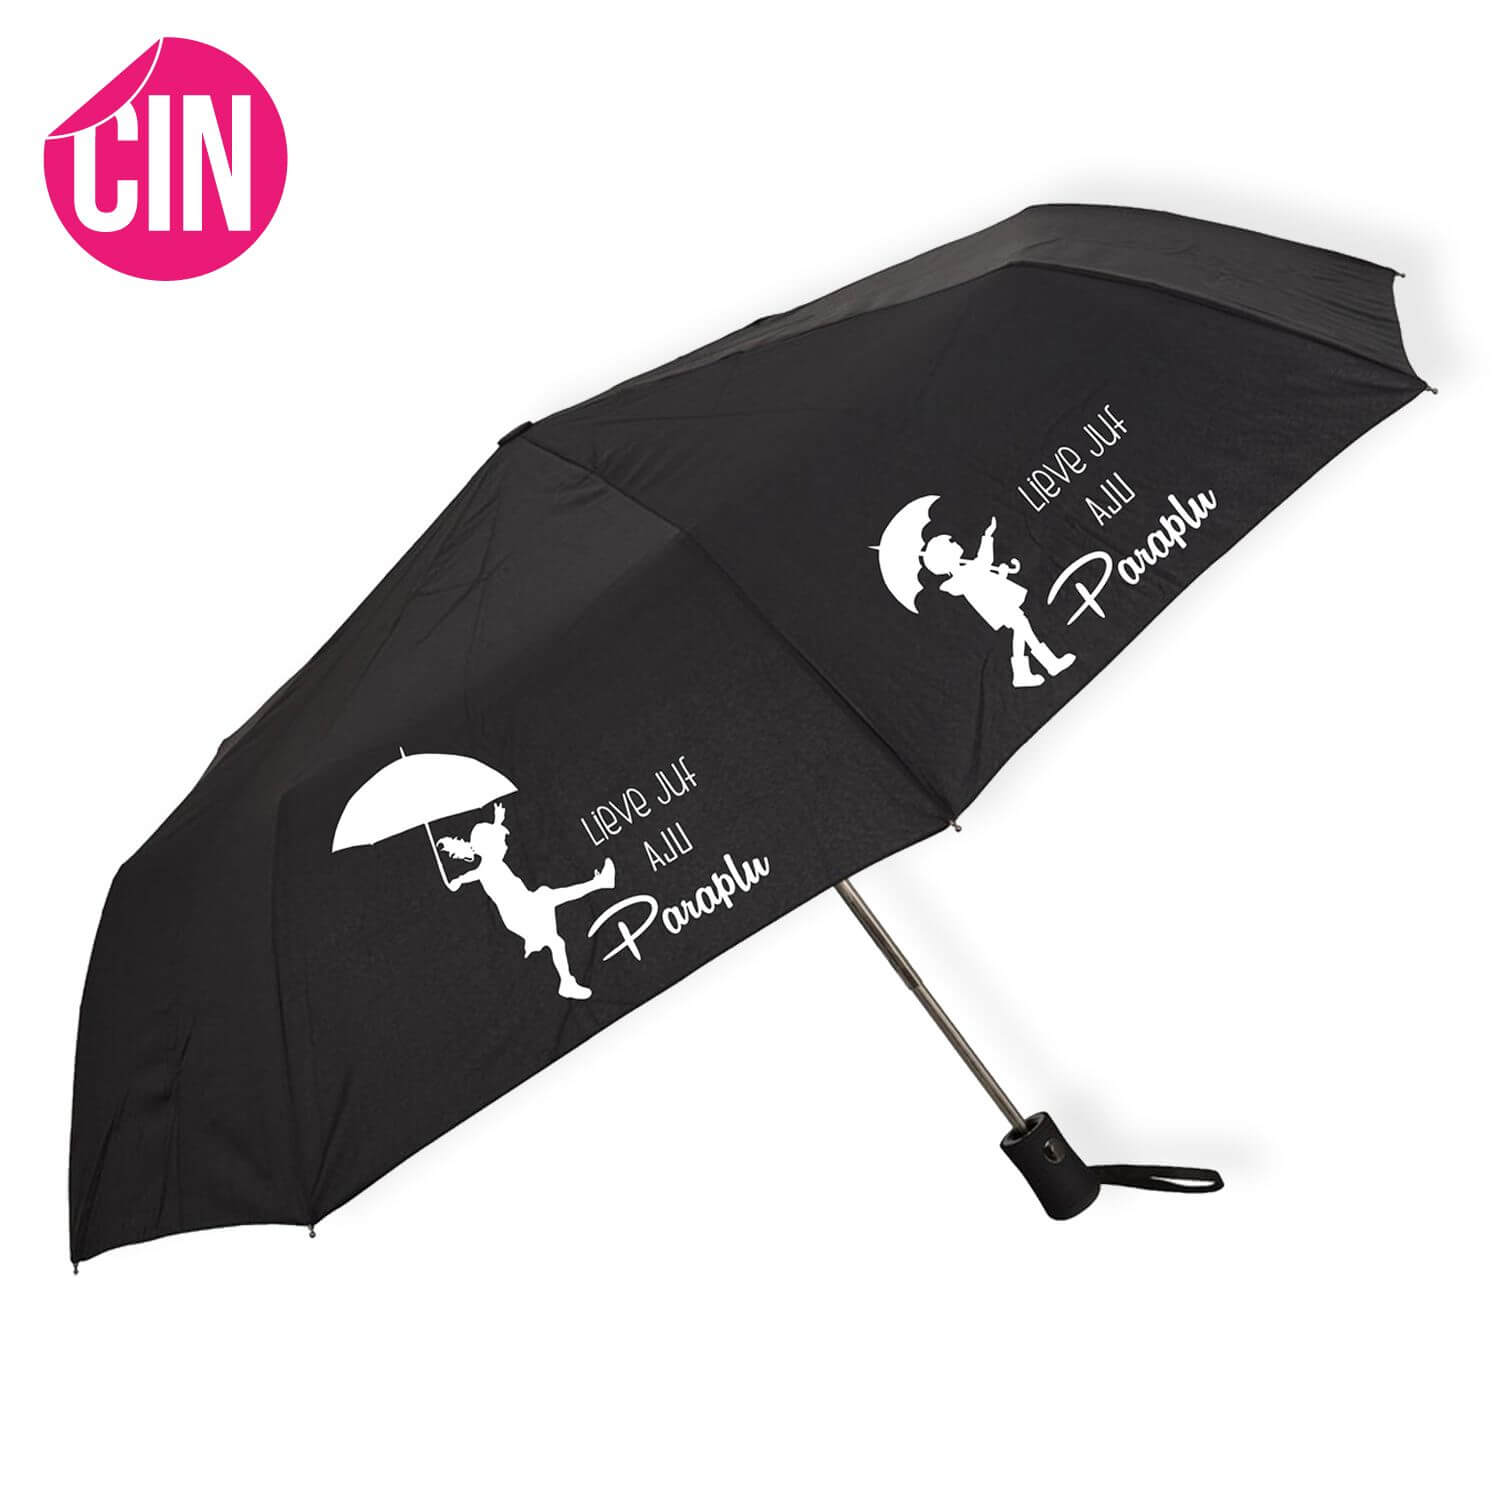 Kers Wierook versieren Paraplu bedrukken - Meester & juffencadeau - Cindysigns